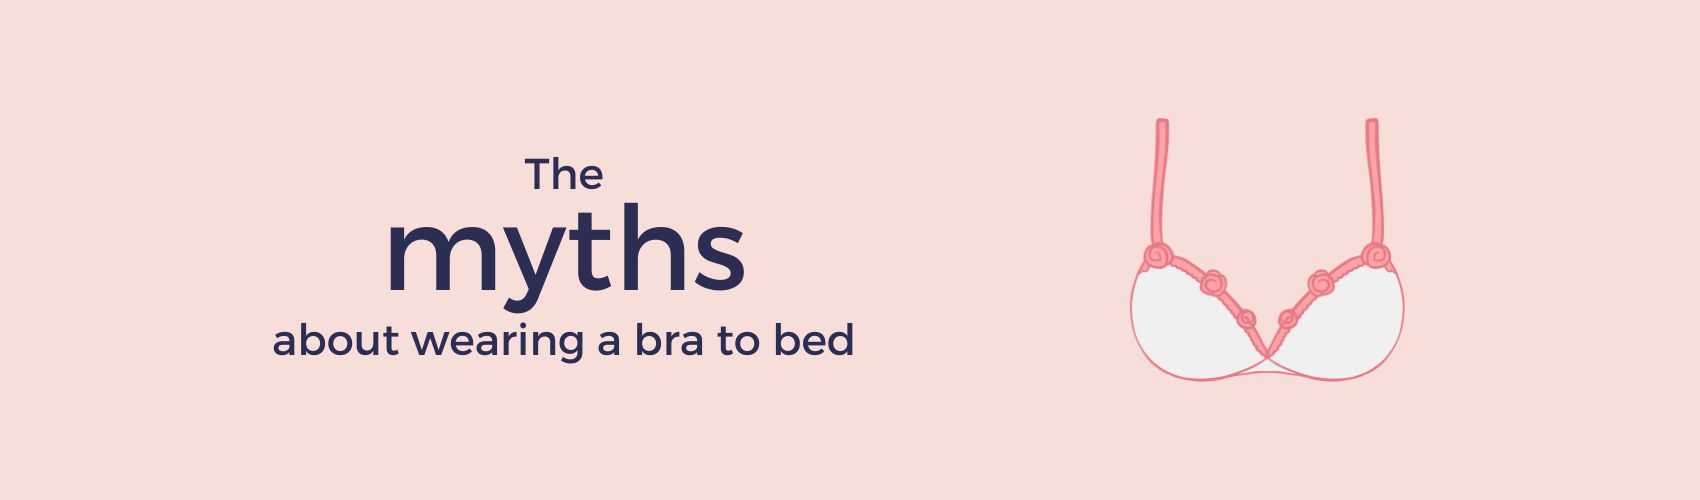 Myths of wearing a bra